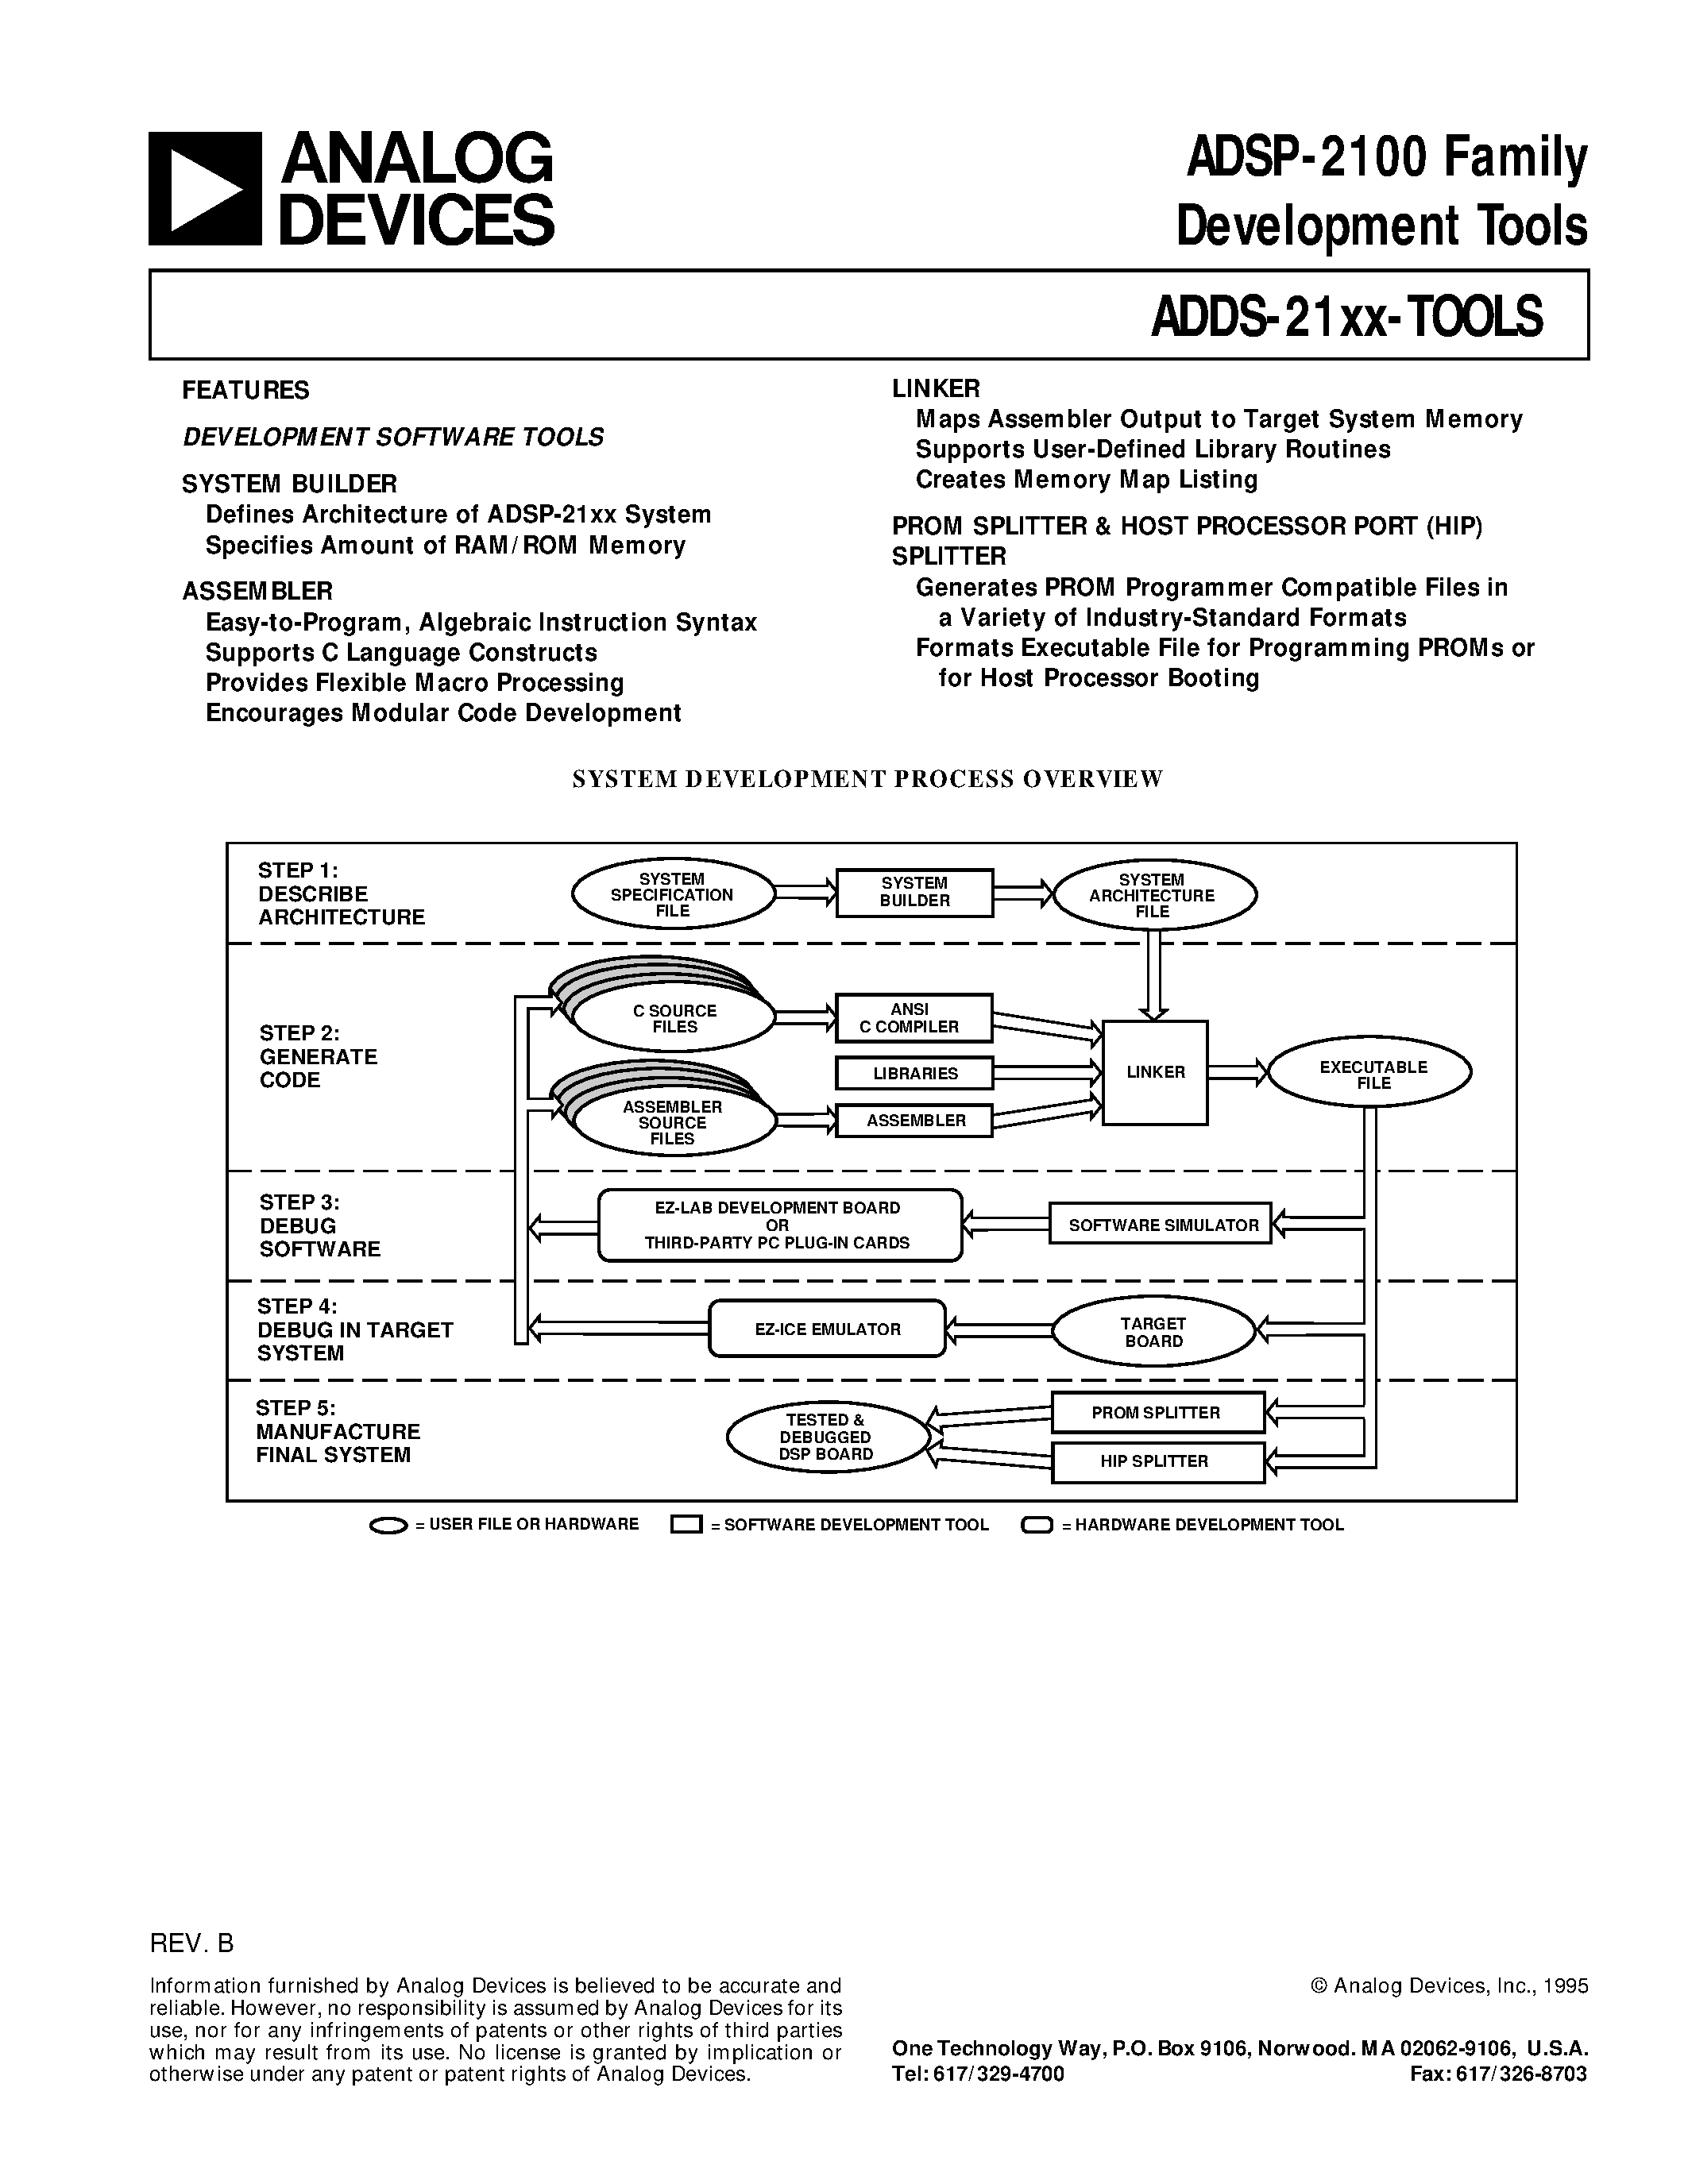 Даташит ADDS-21XX-EZLITE - ADSP-2100 Family Development Tools страница 1